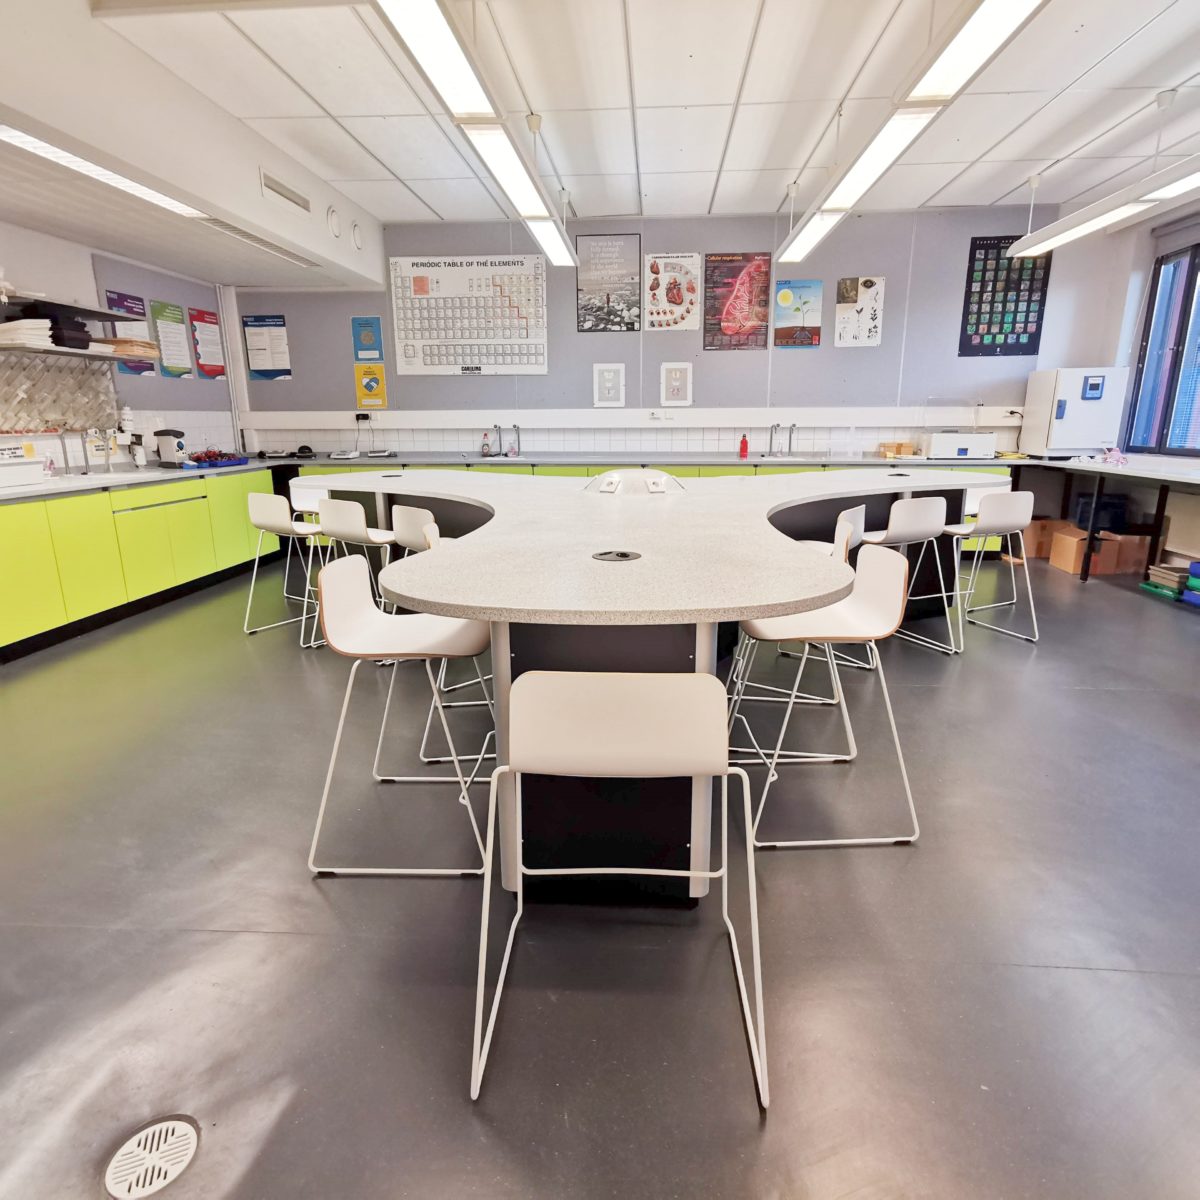 Science laboratory at International School of Helsinki installed by S+B UK